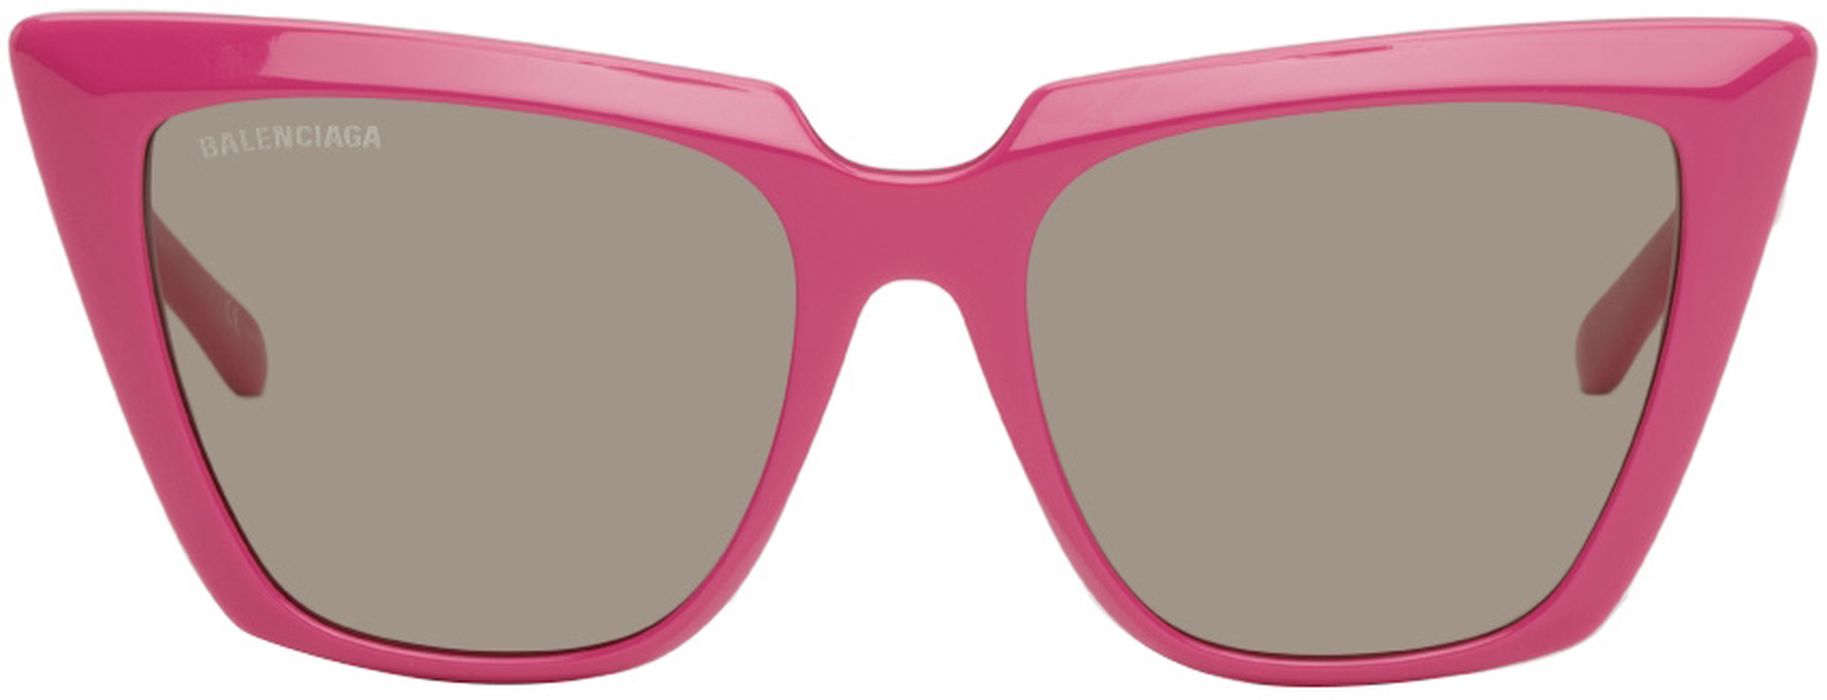 Balenciaga Pink Cat-Eye Sunglasses